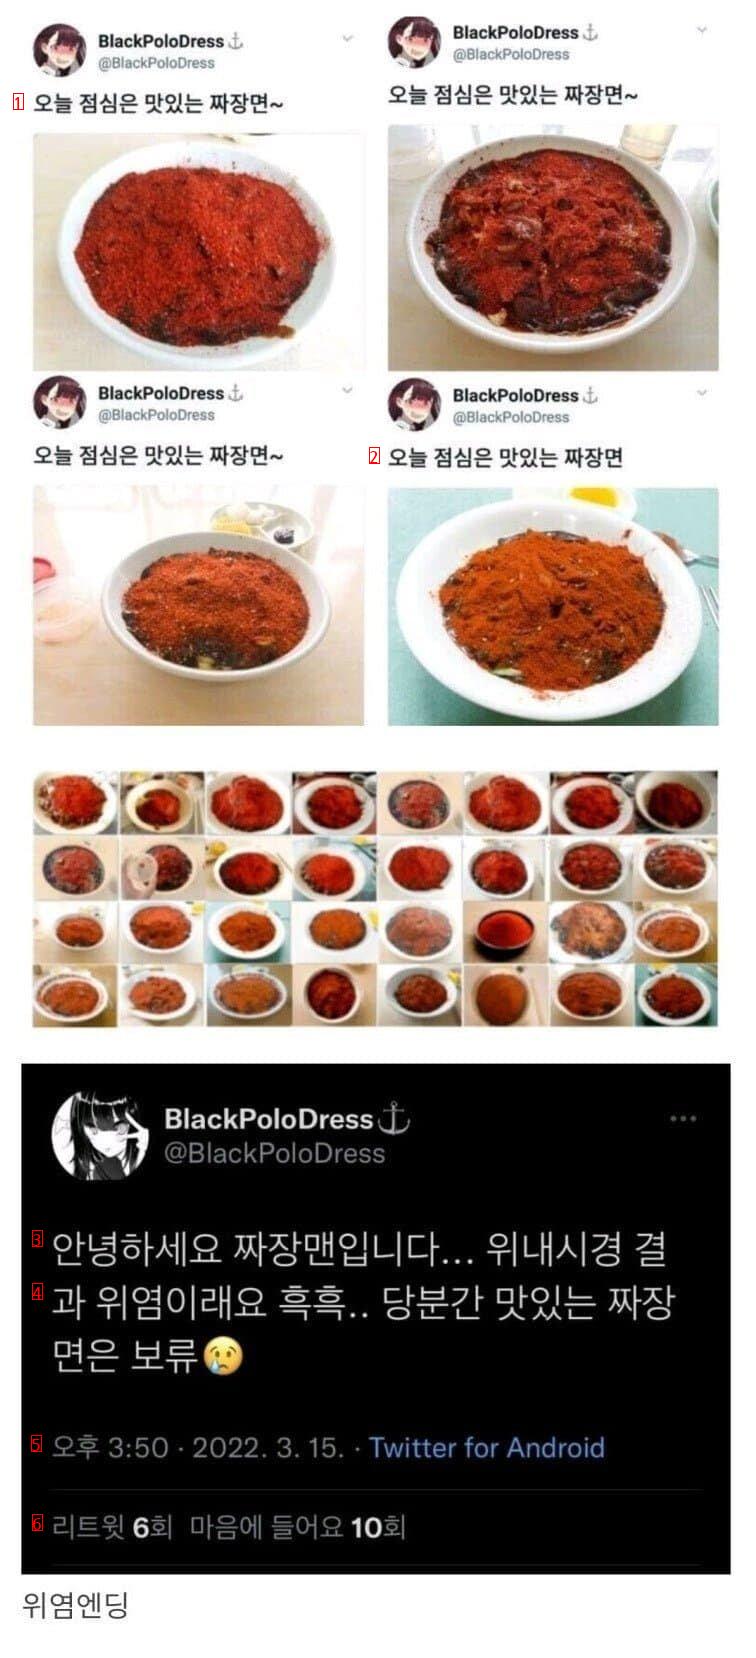 Black Bean Noodles, red pepper powder bomb villain. Jpg